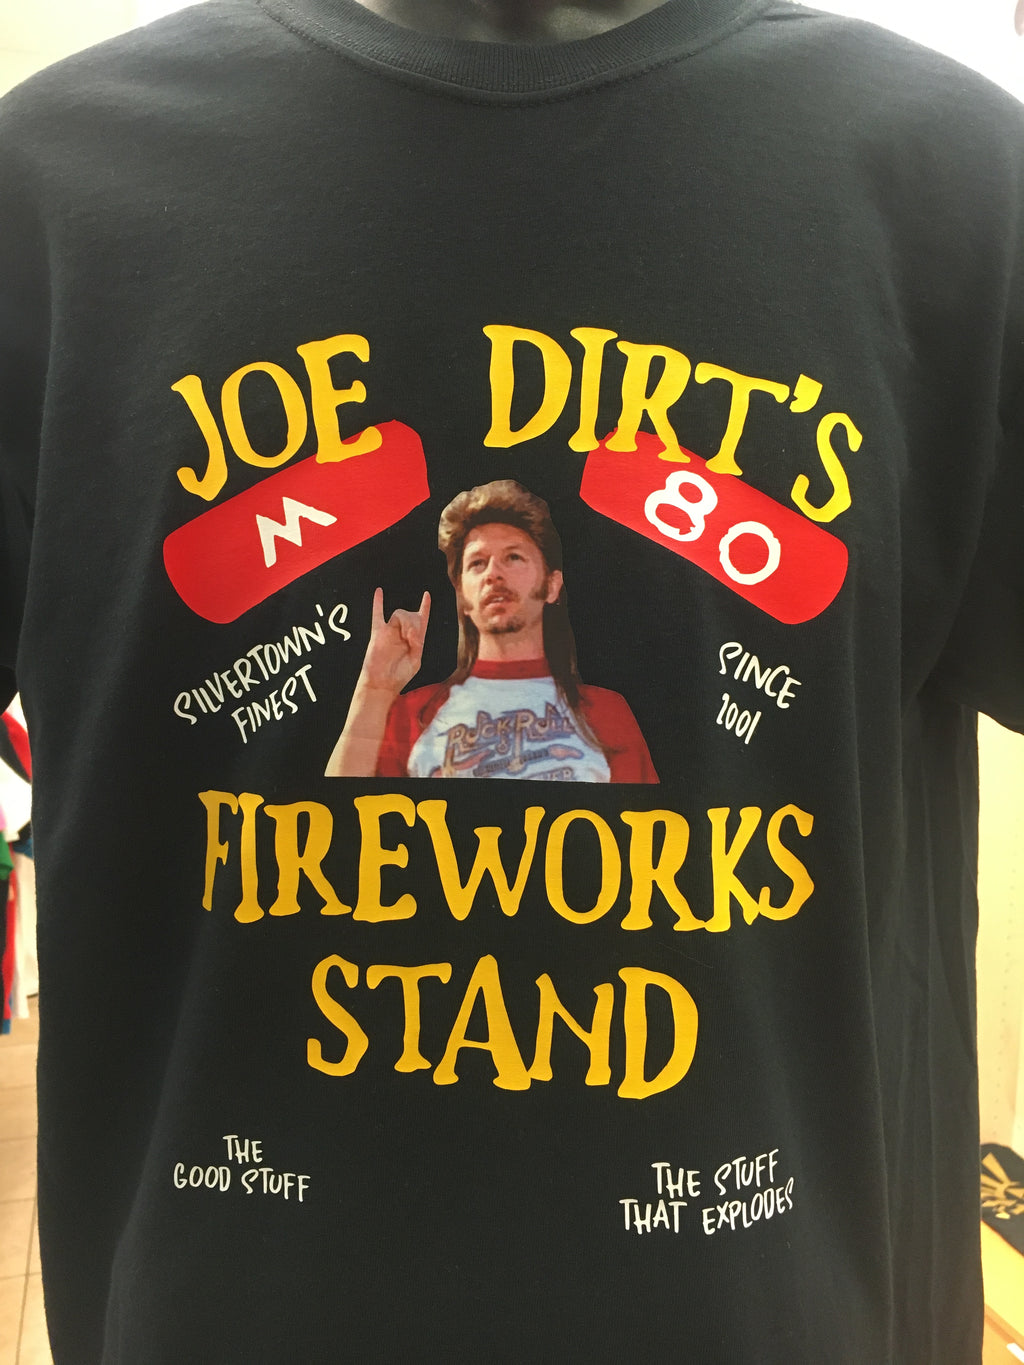 *Joe Dirt’s Fireworks Stand*